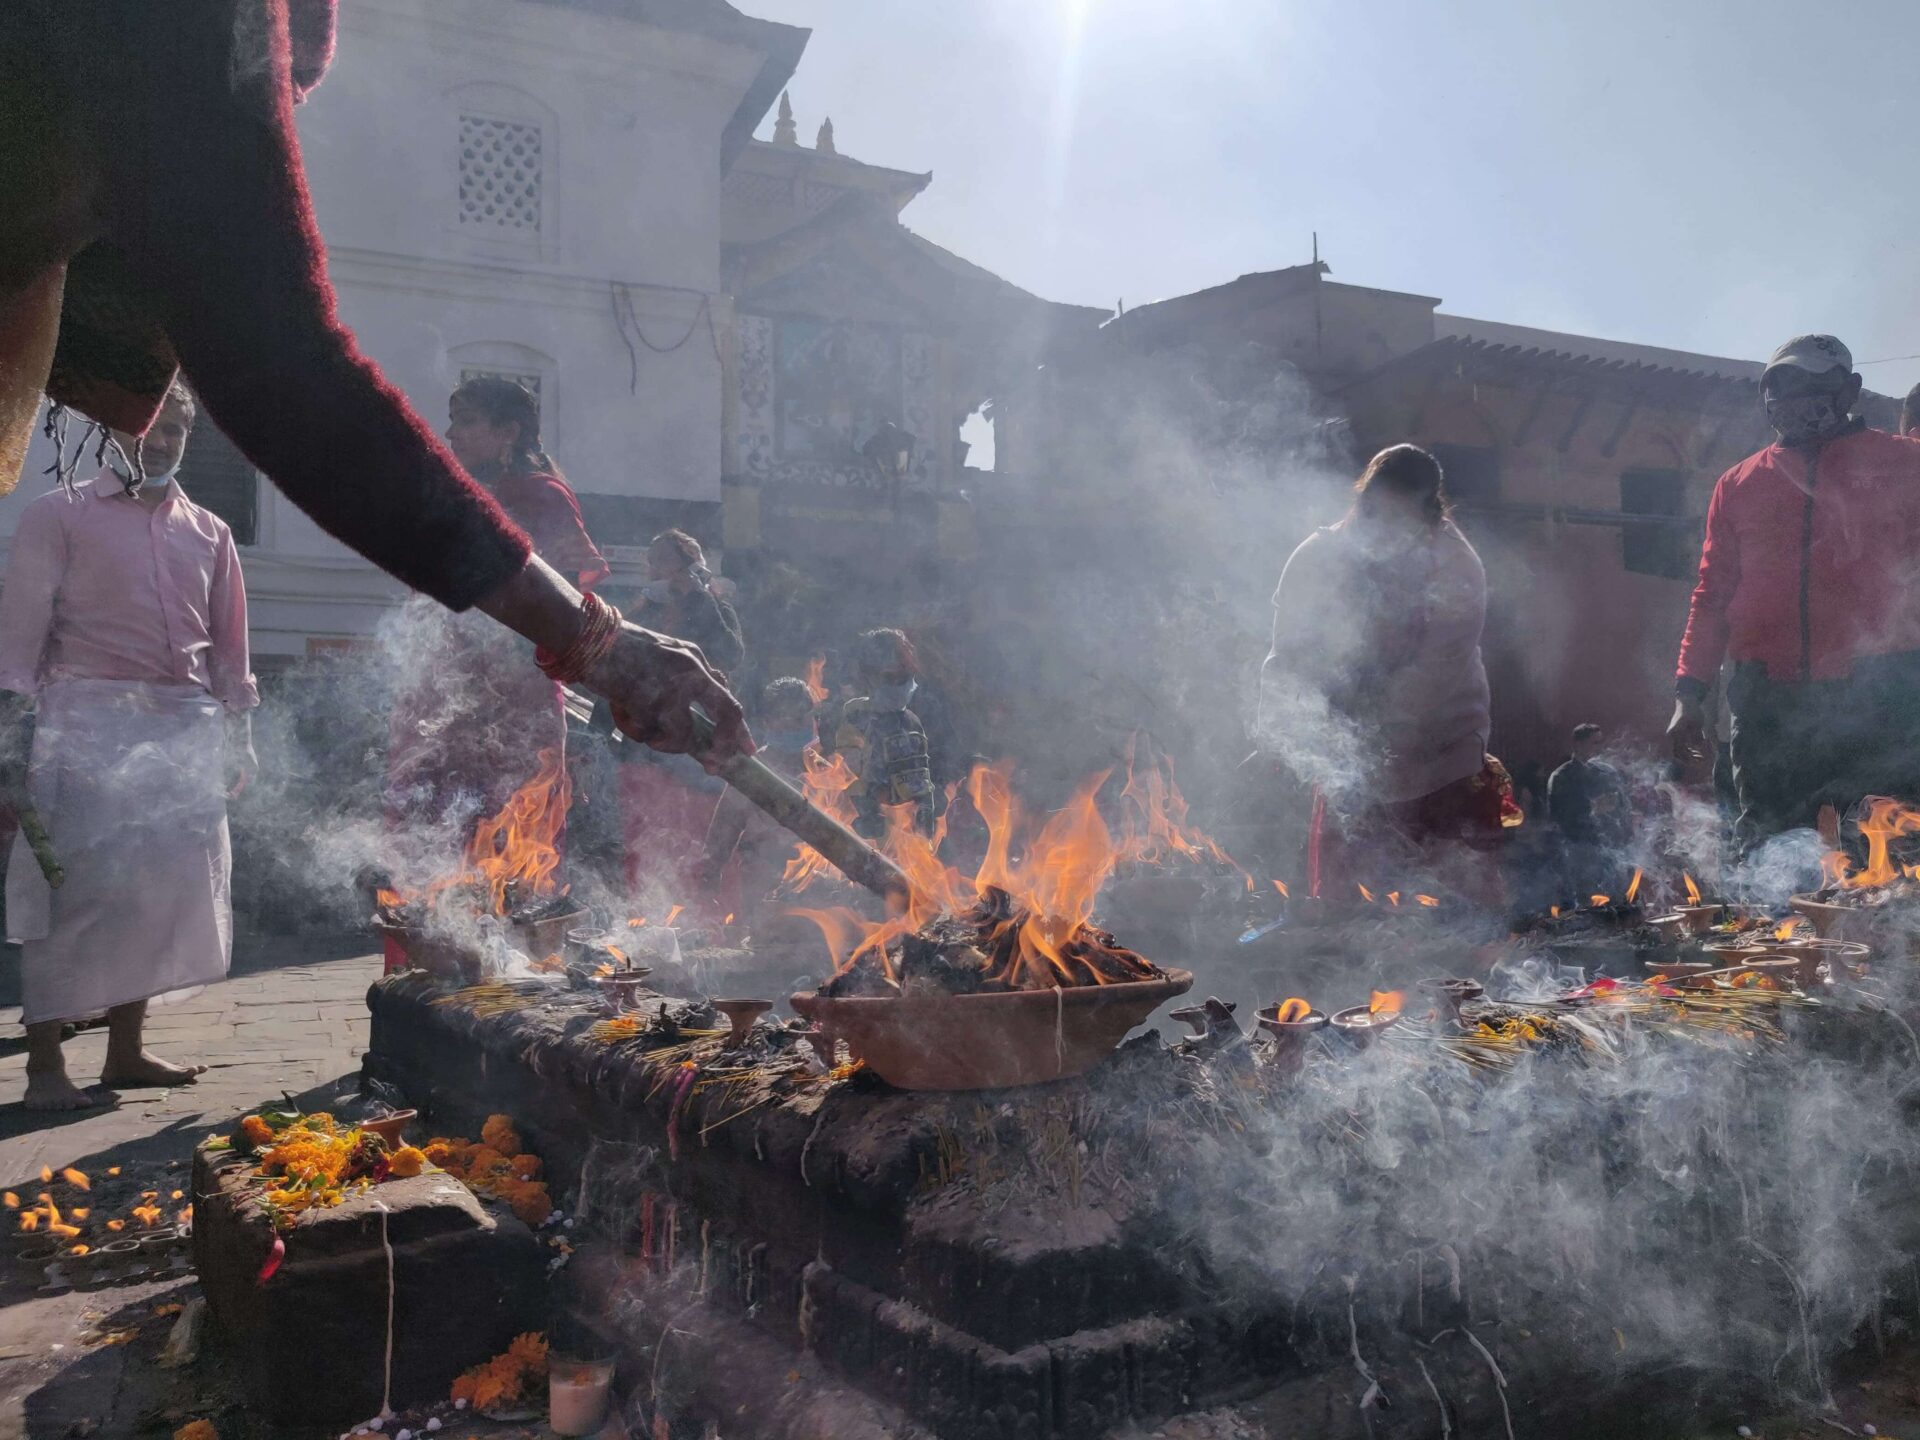 Burning flames at pashupatinath, Nepali culture